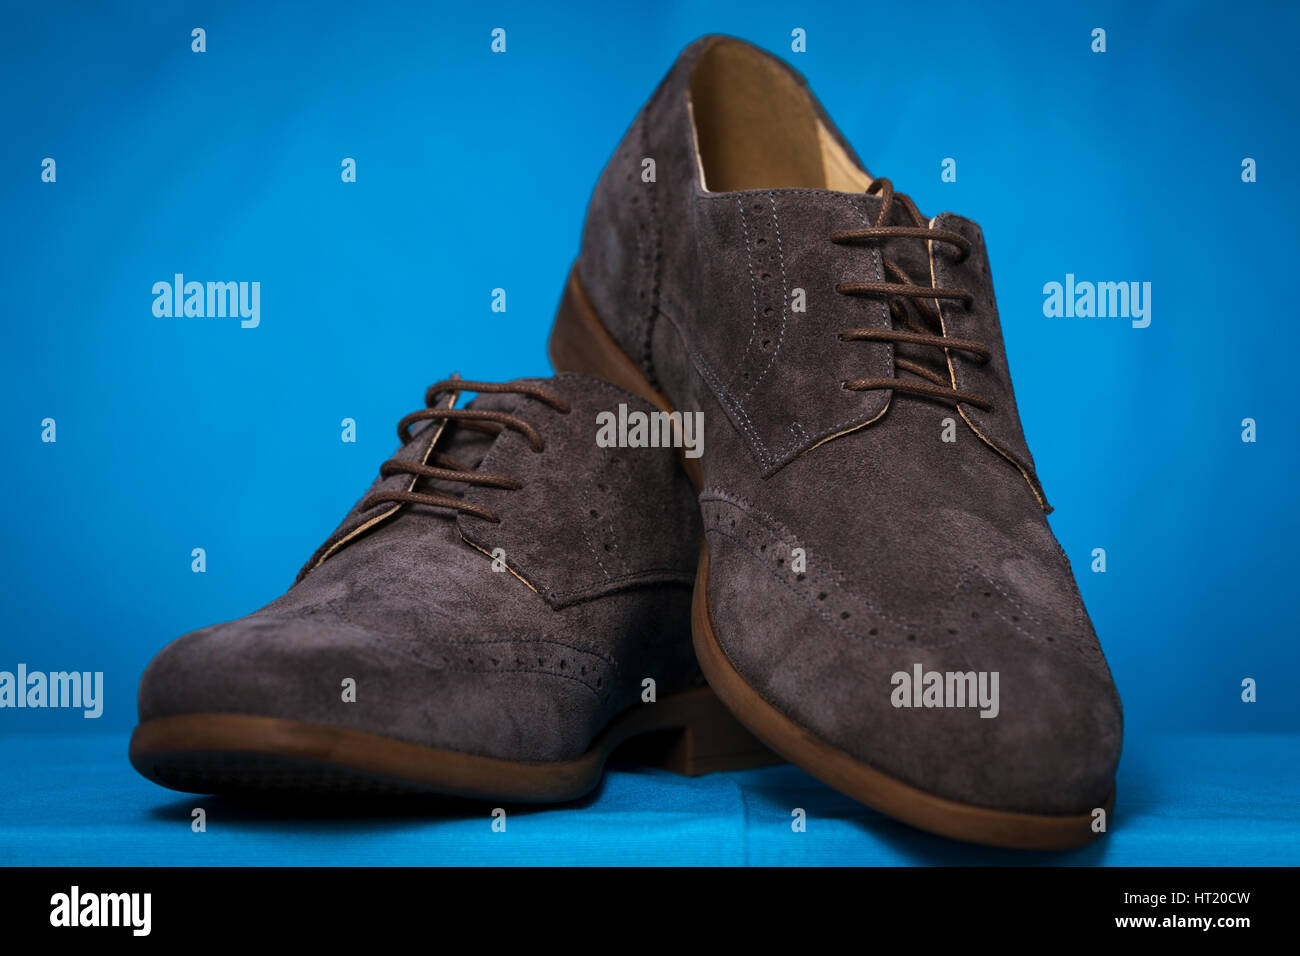 Mens Geox Respira Schuhe Stockfotografie - Alamy